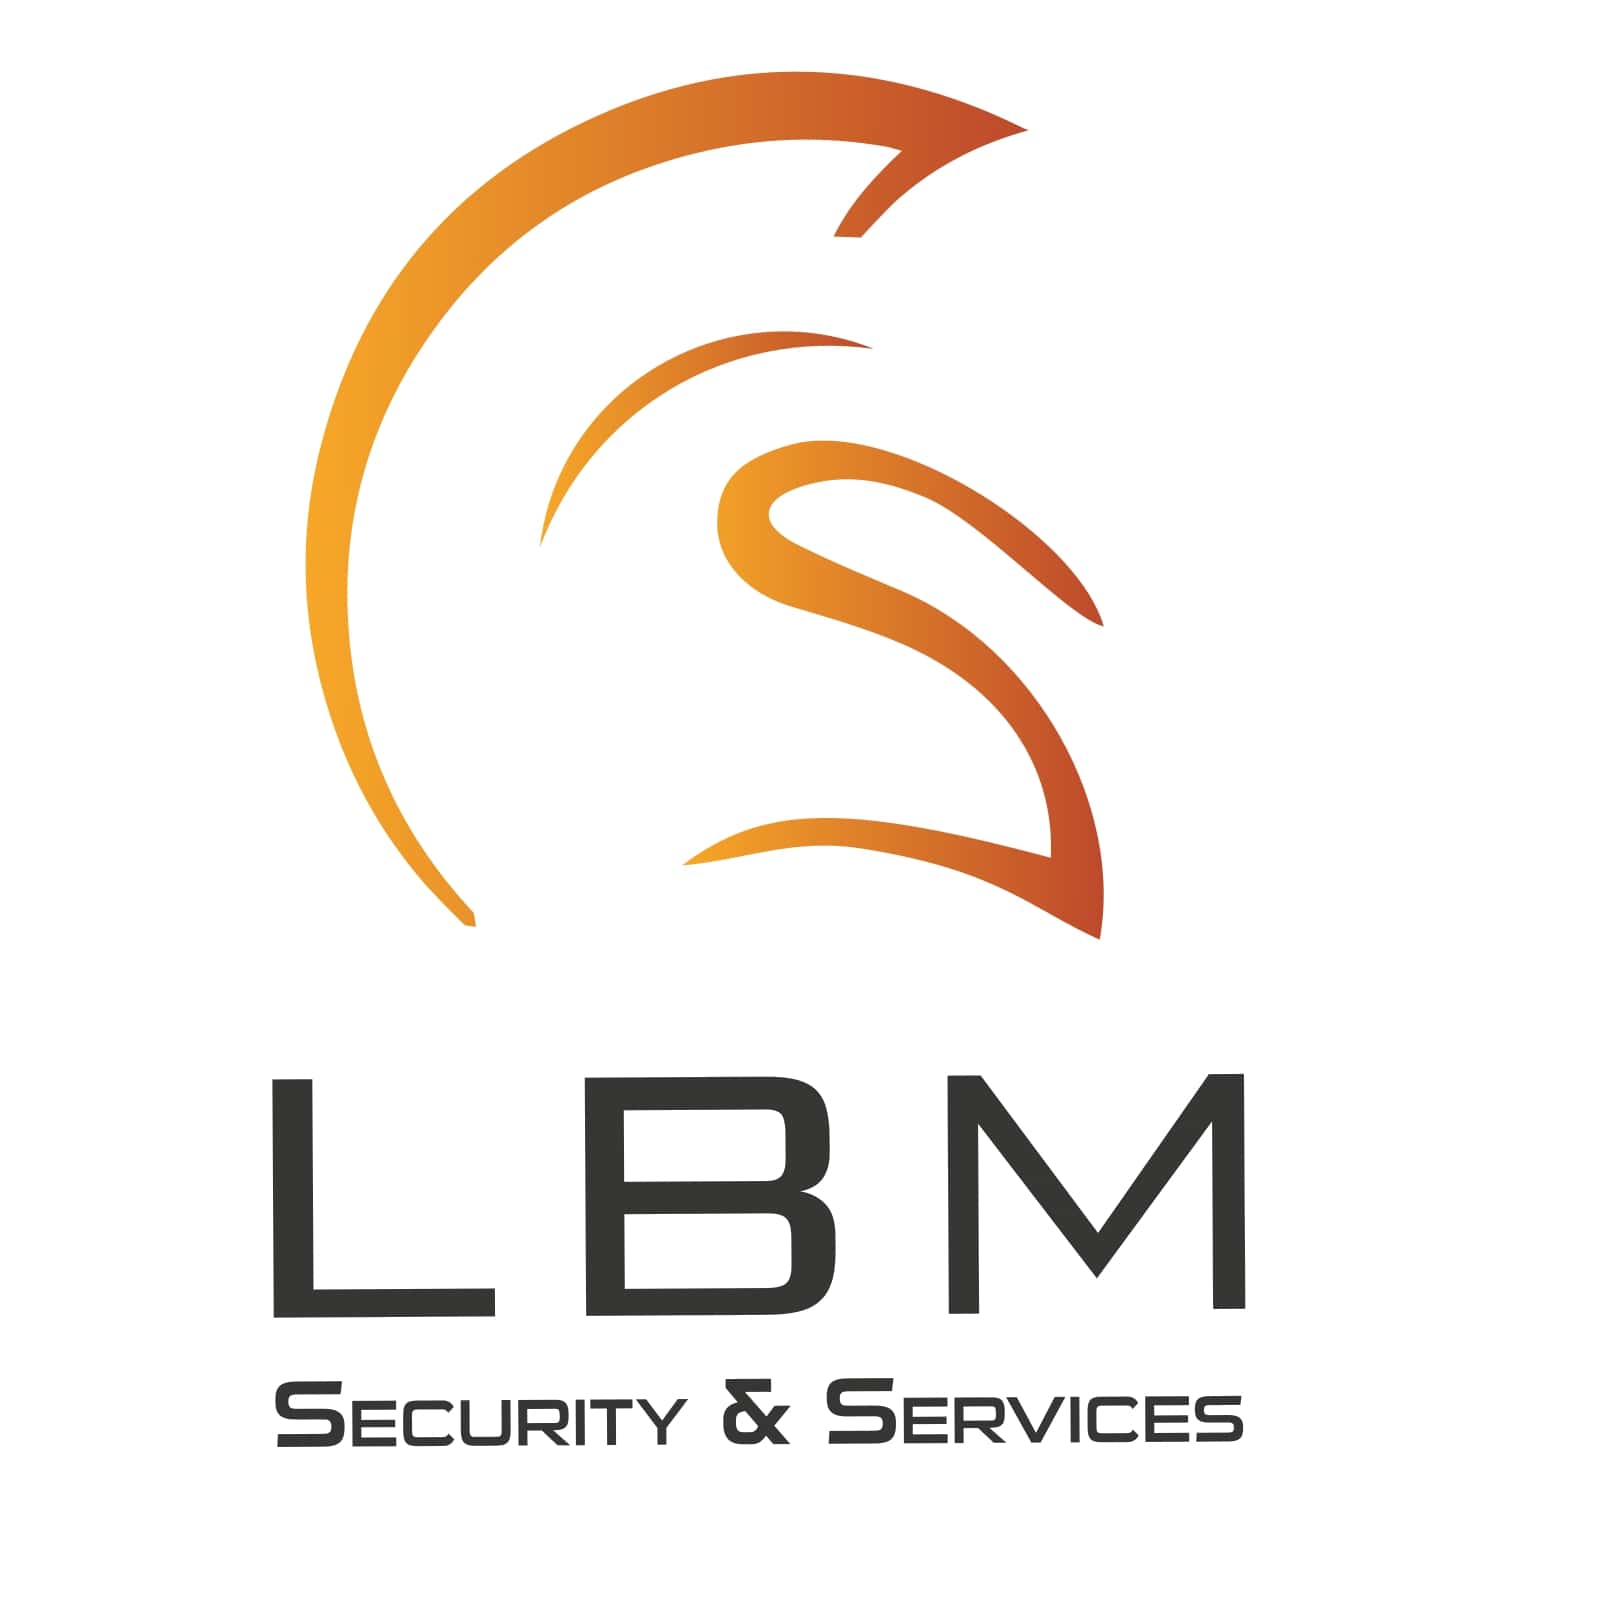 LBM Security & Services logo